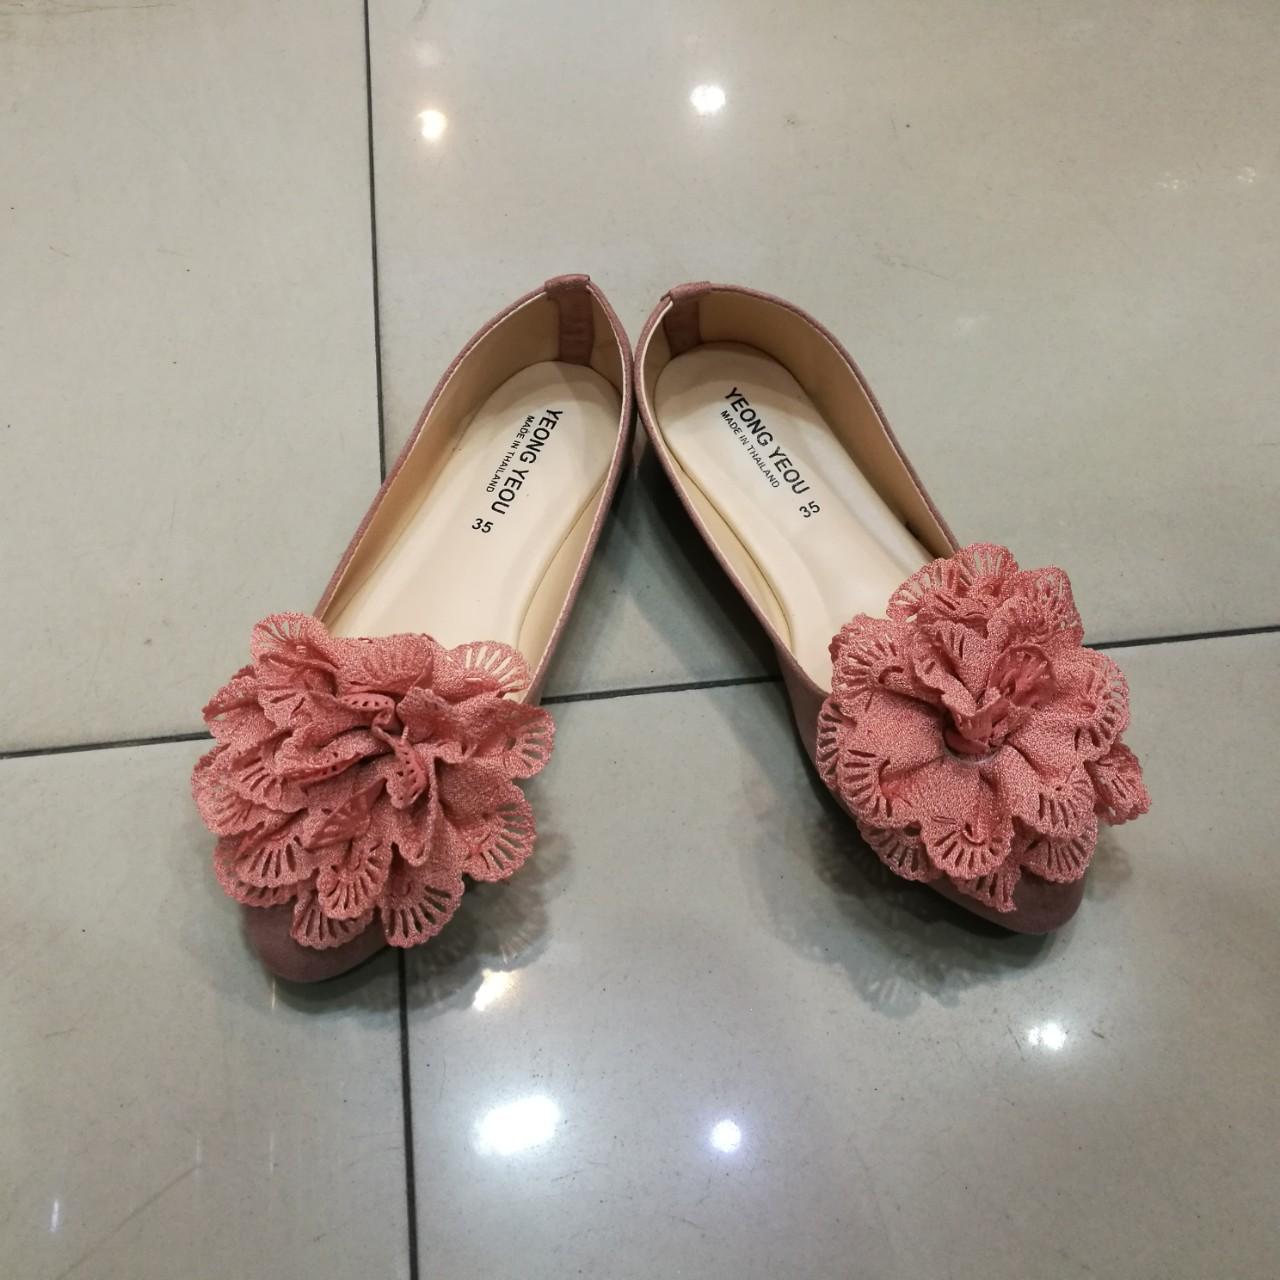 yeong yeou รองเท้าคัทชูส้นแบนโบว์ดอกไม้ผ้าหนังกลับ รหัสyy655